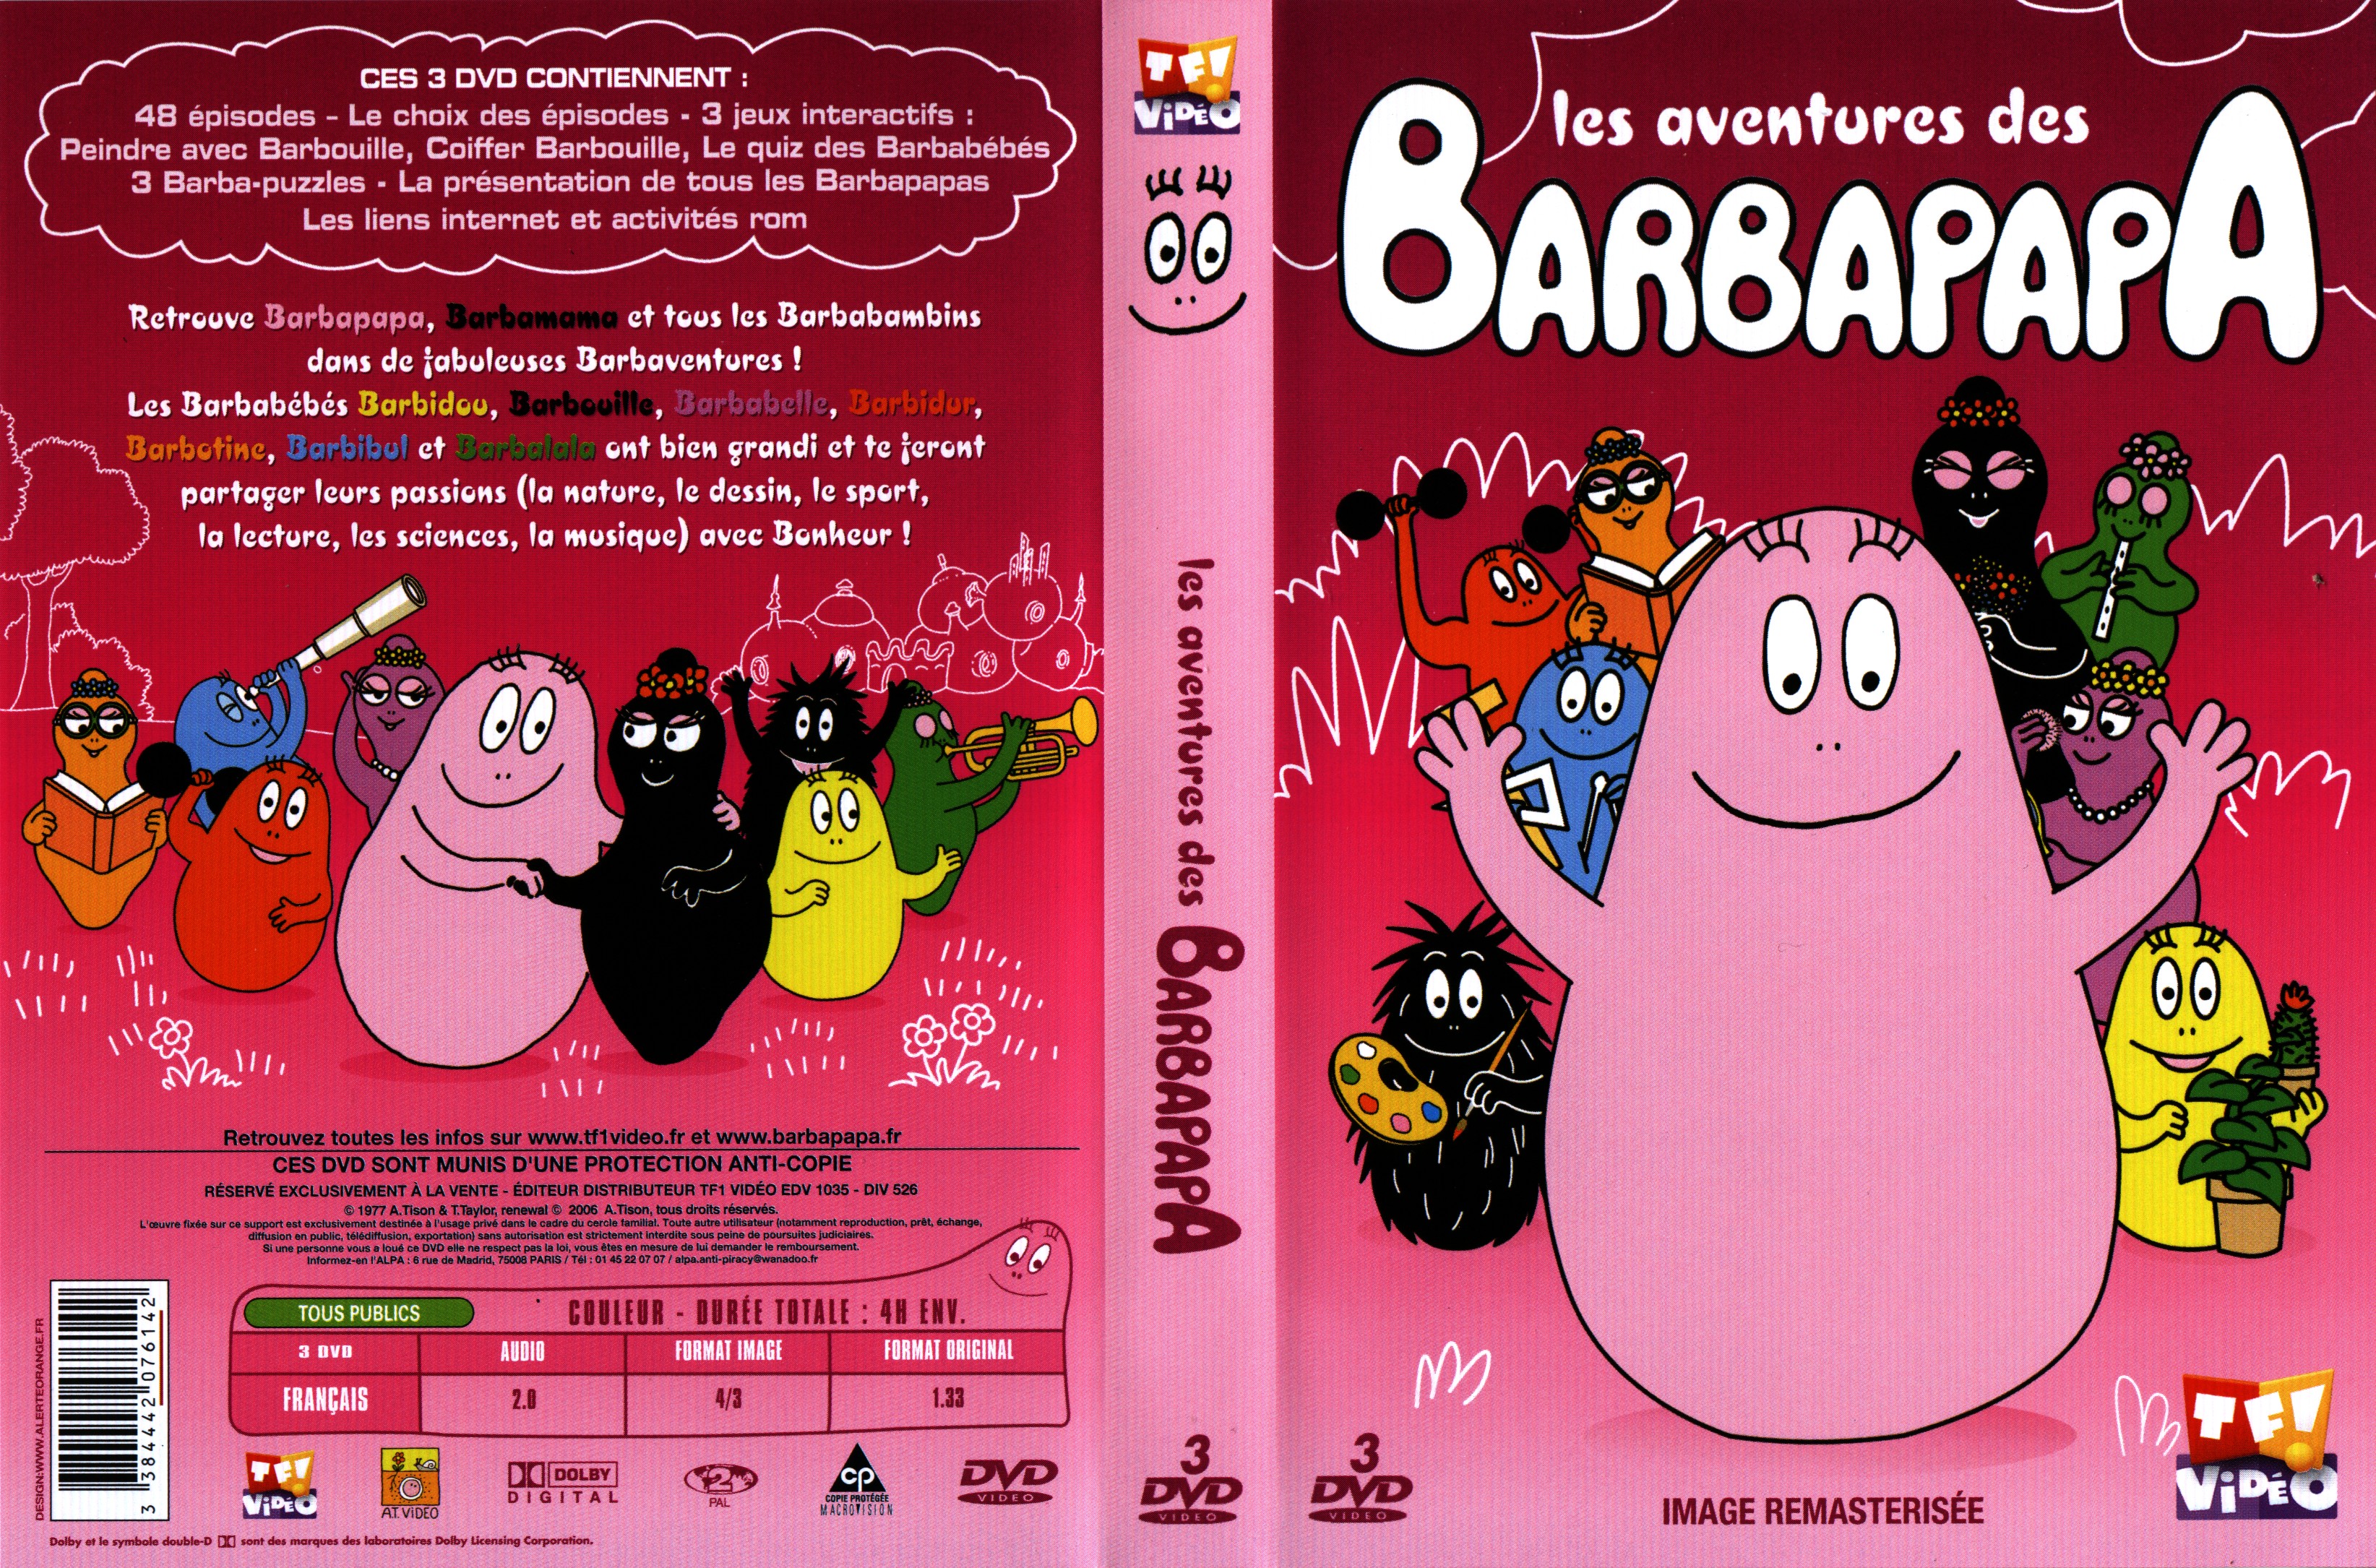 Jaquette DVD Barbapapa - les aventures des Barbapapa